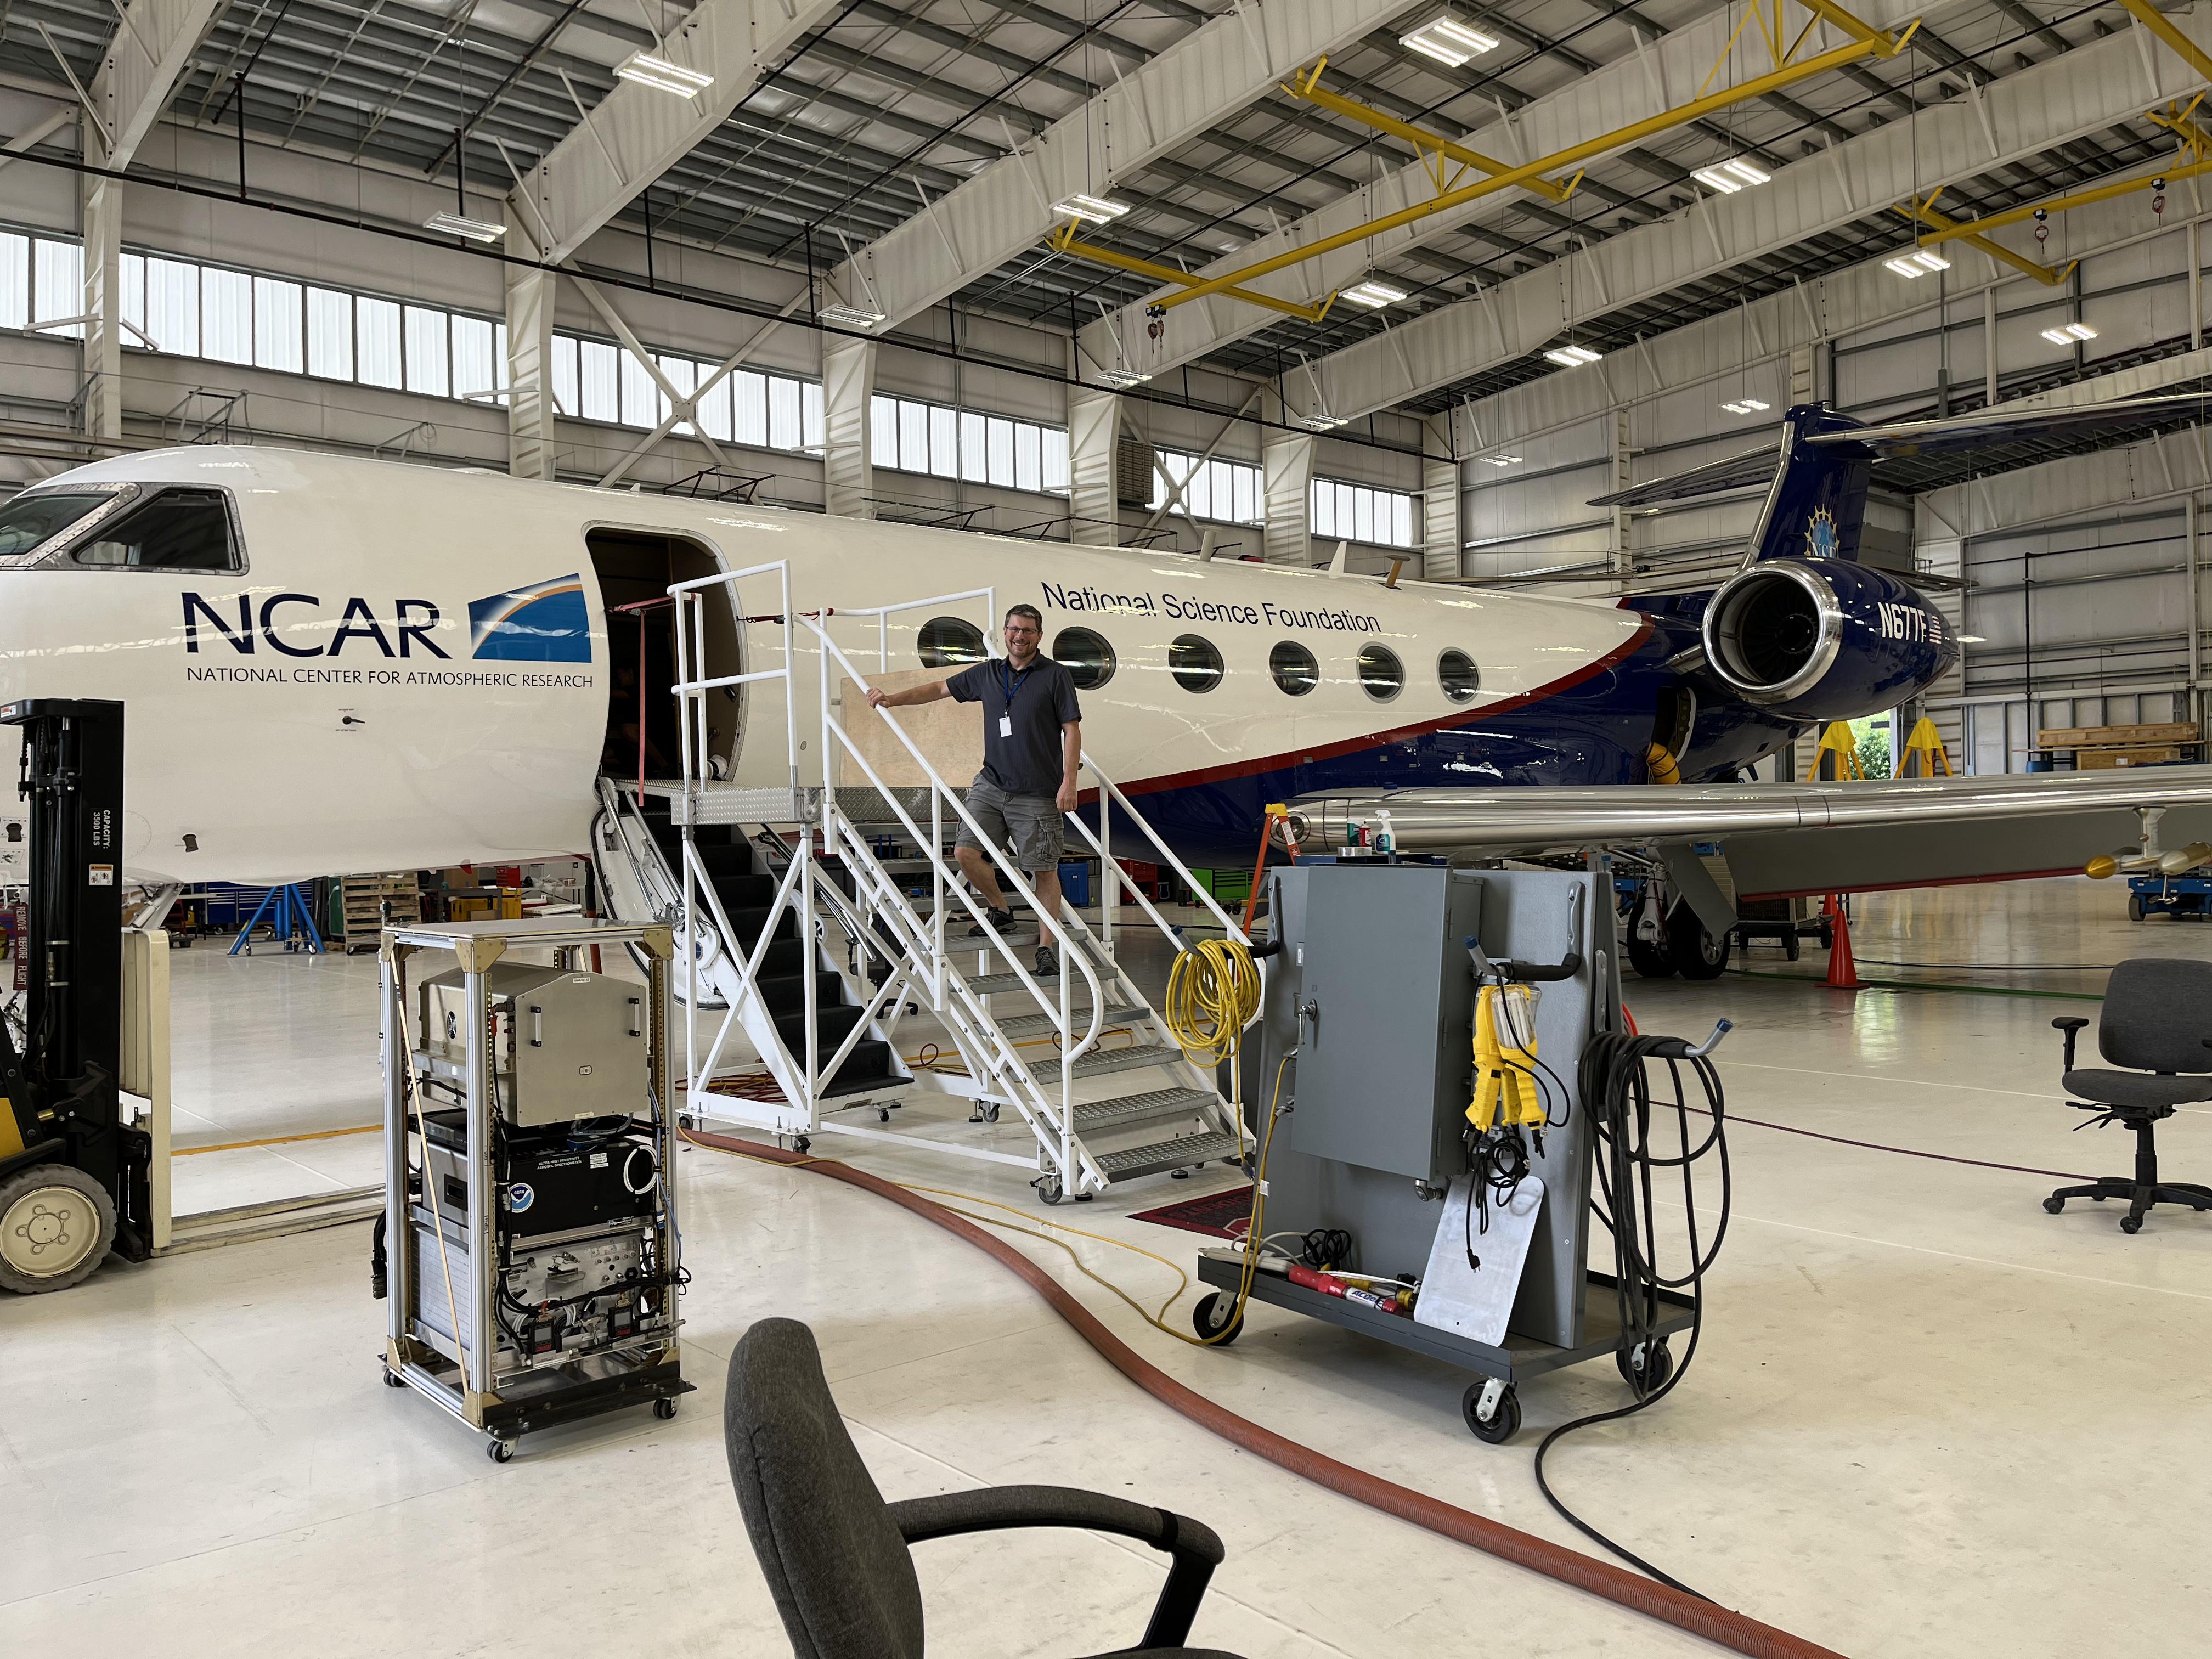 Preparing the Gulfstream research aircraft.